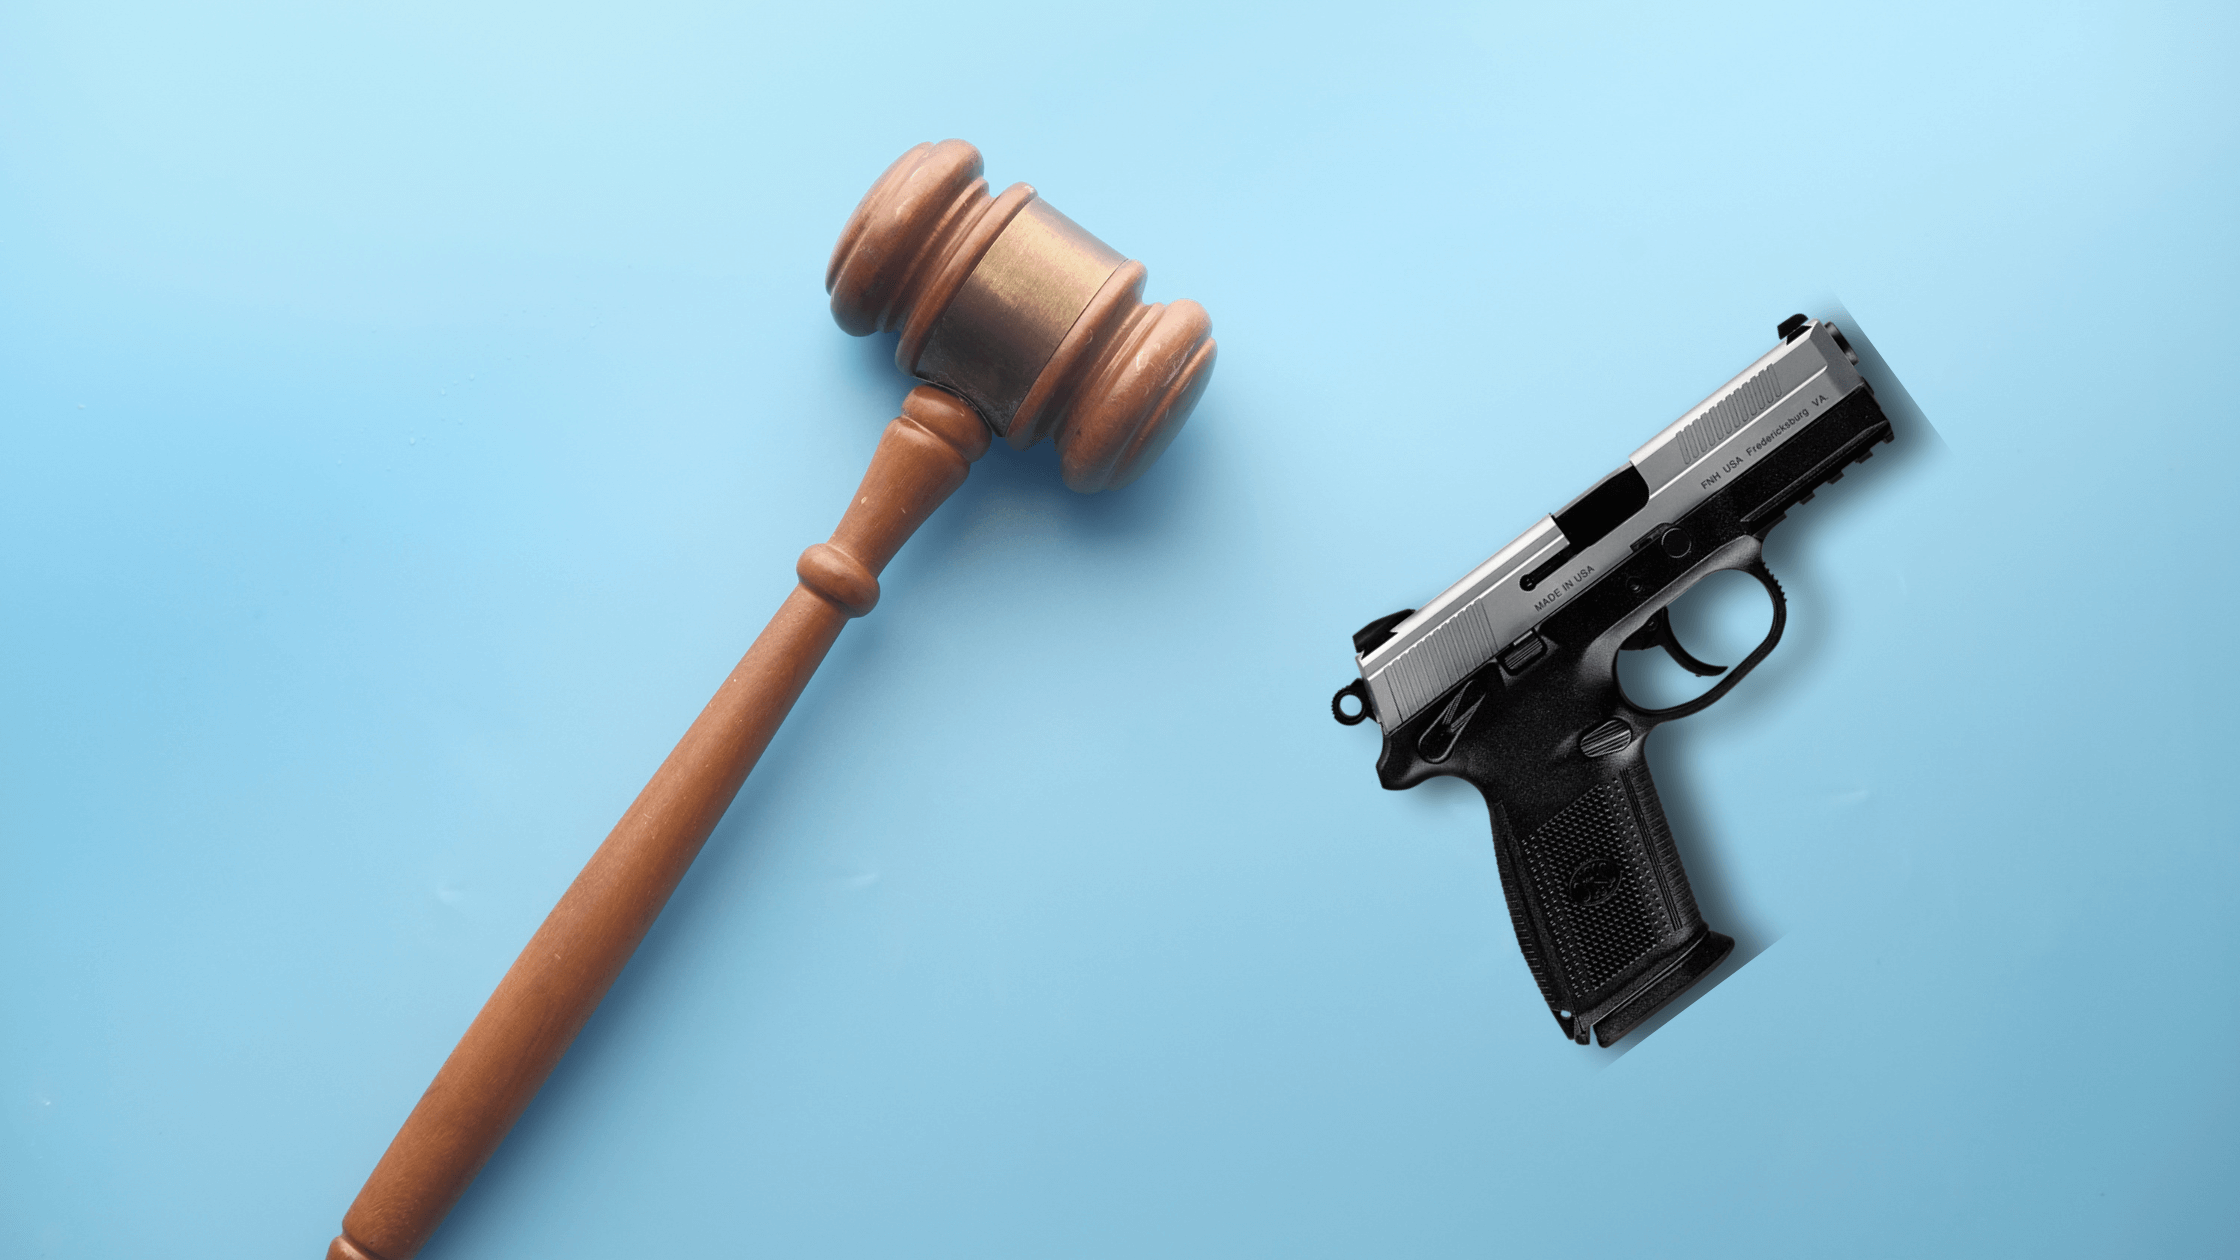 Gavel and handgun symbolizing legal issues regarding weapon misconduct.